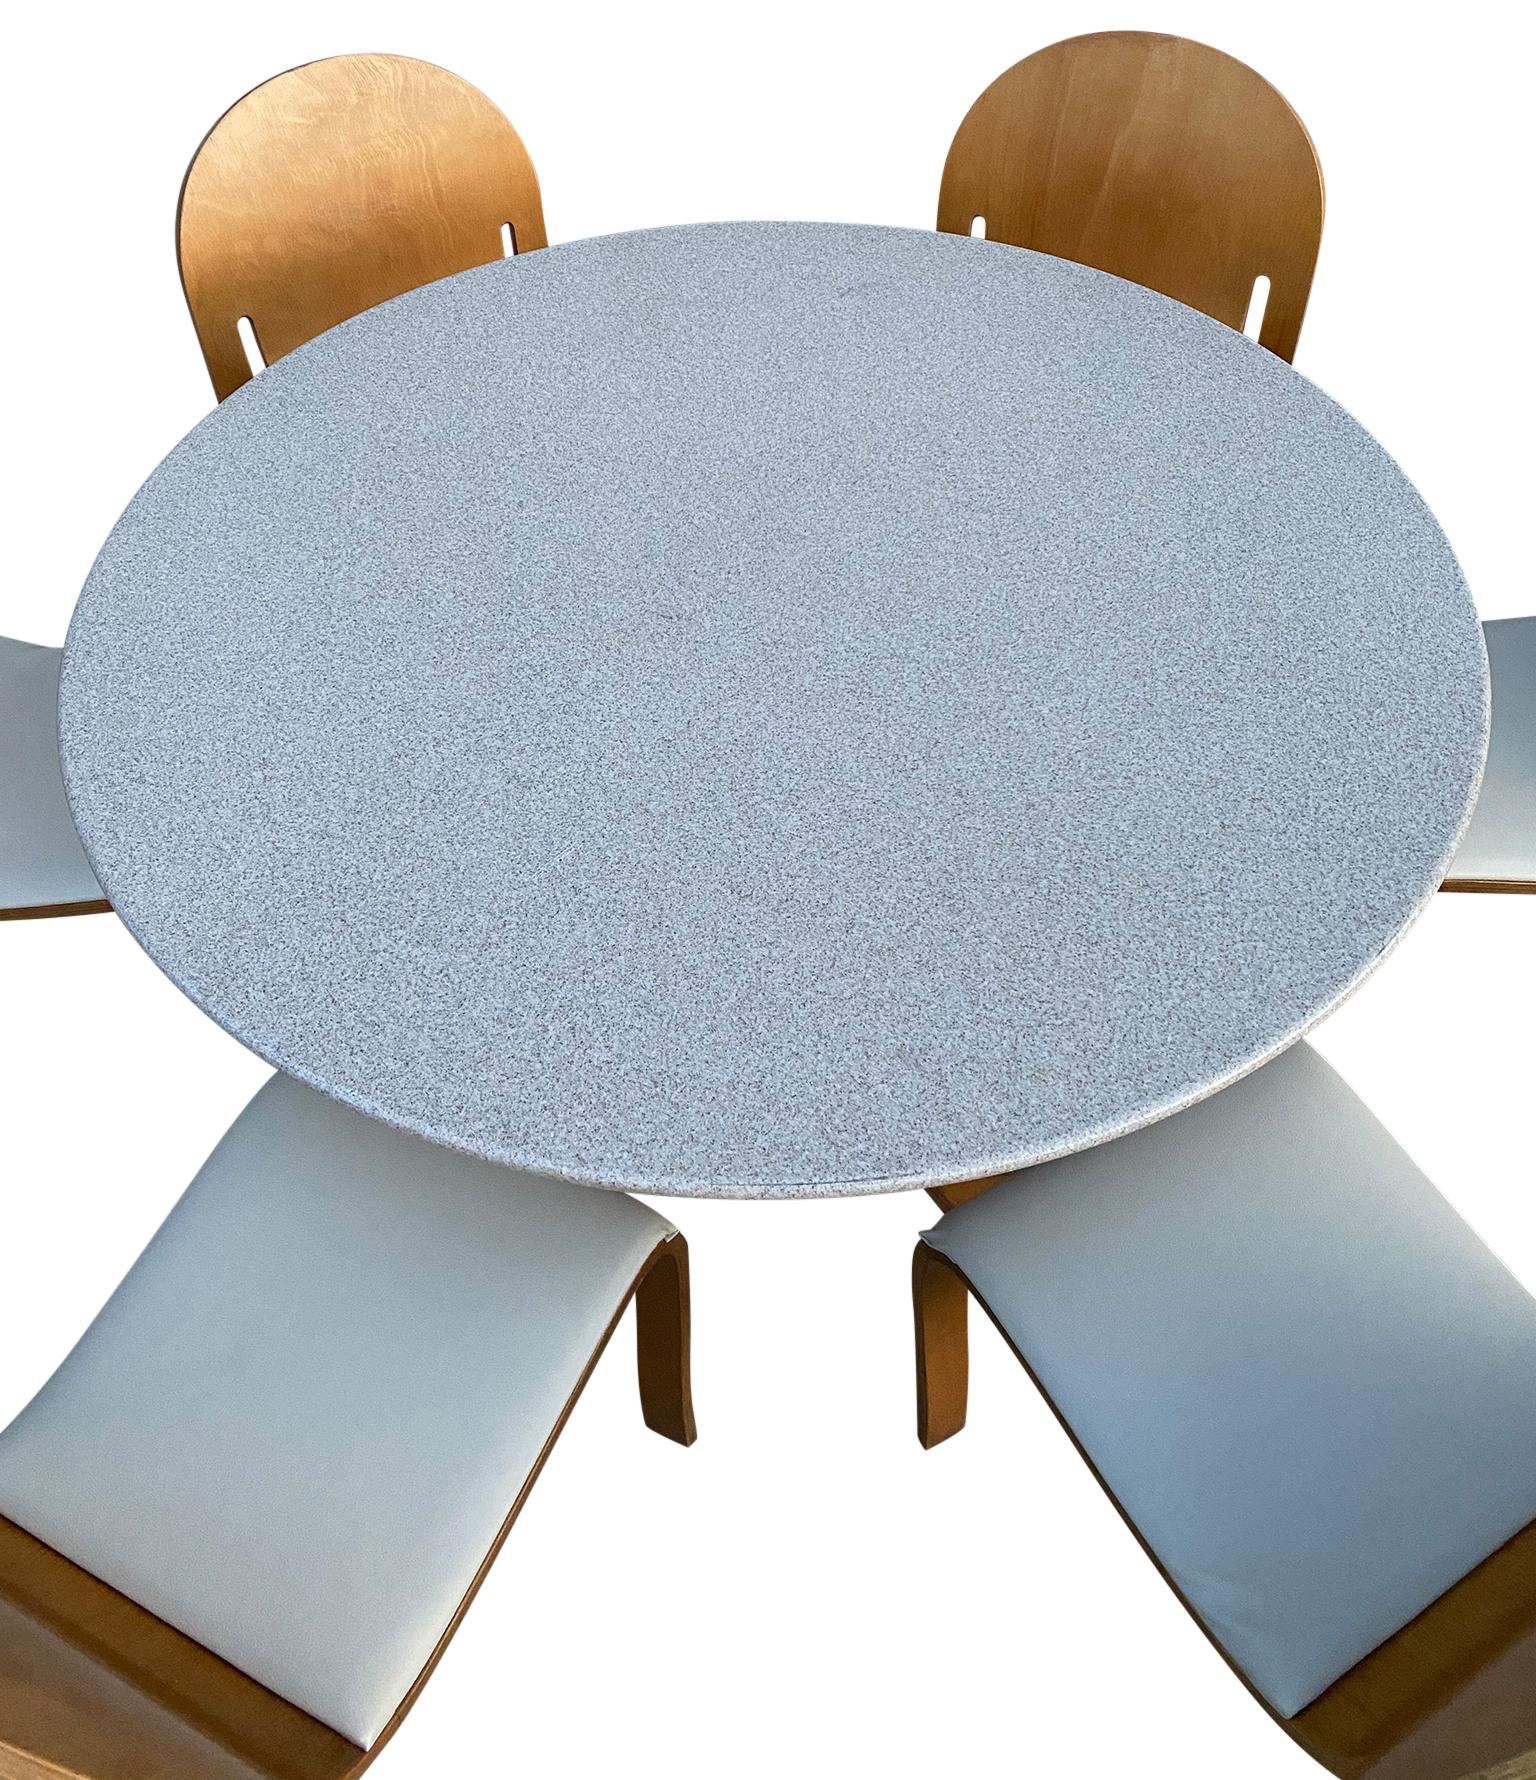 American Rare Peter Danko Design Mid-Century Modern Dining Table '6' Chairs Bent Wood